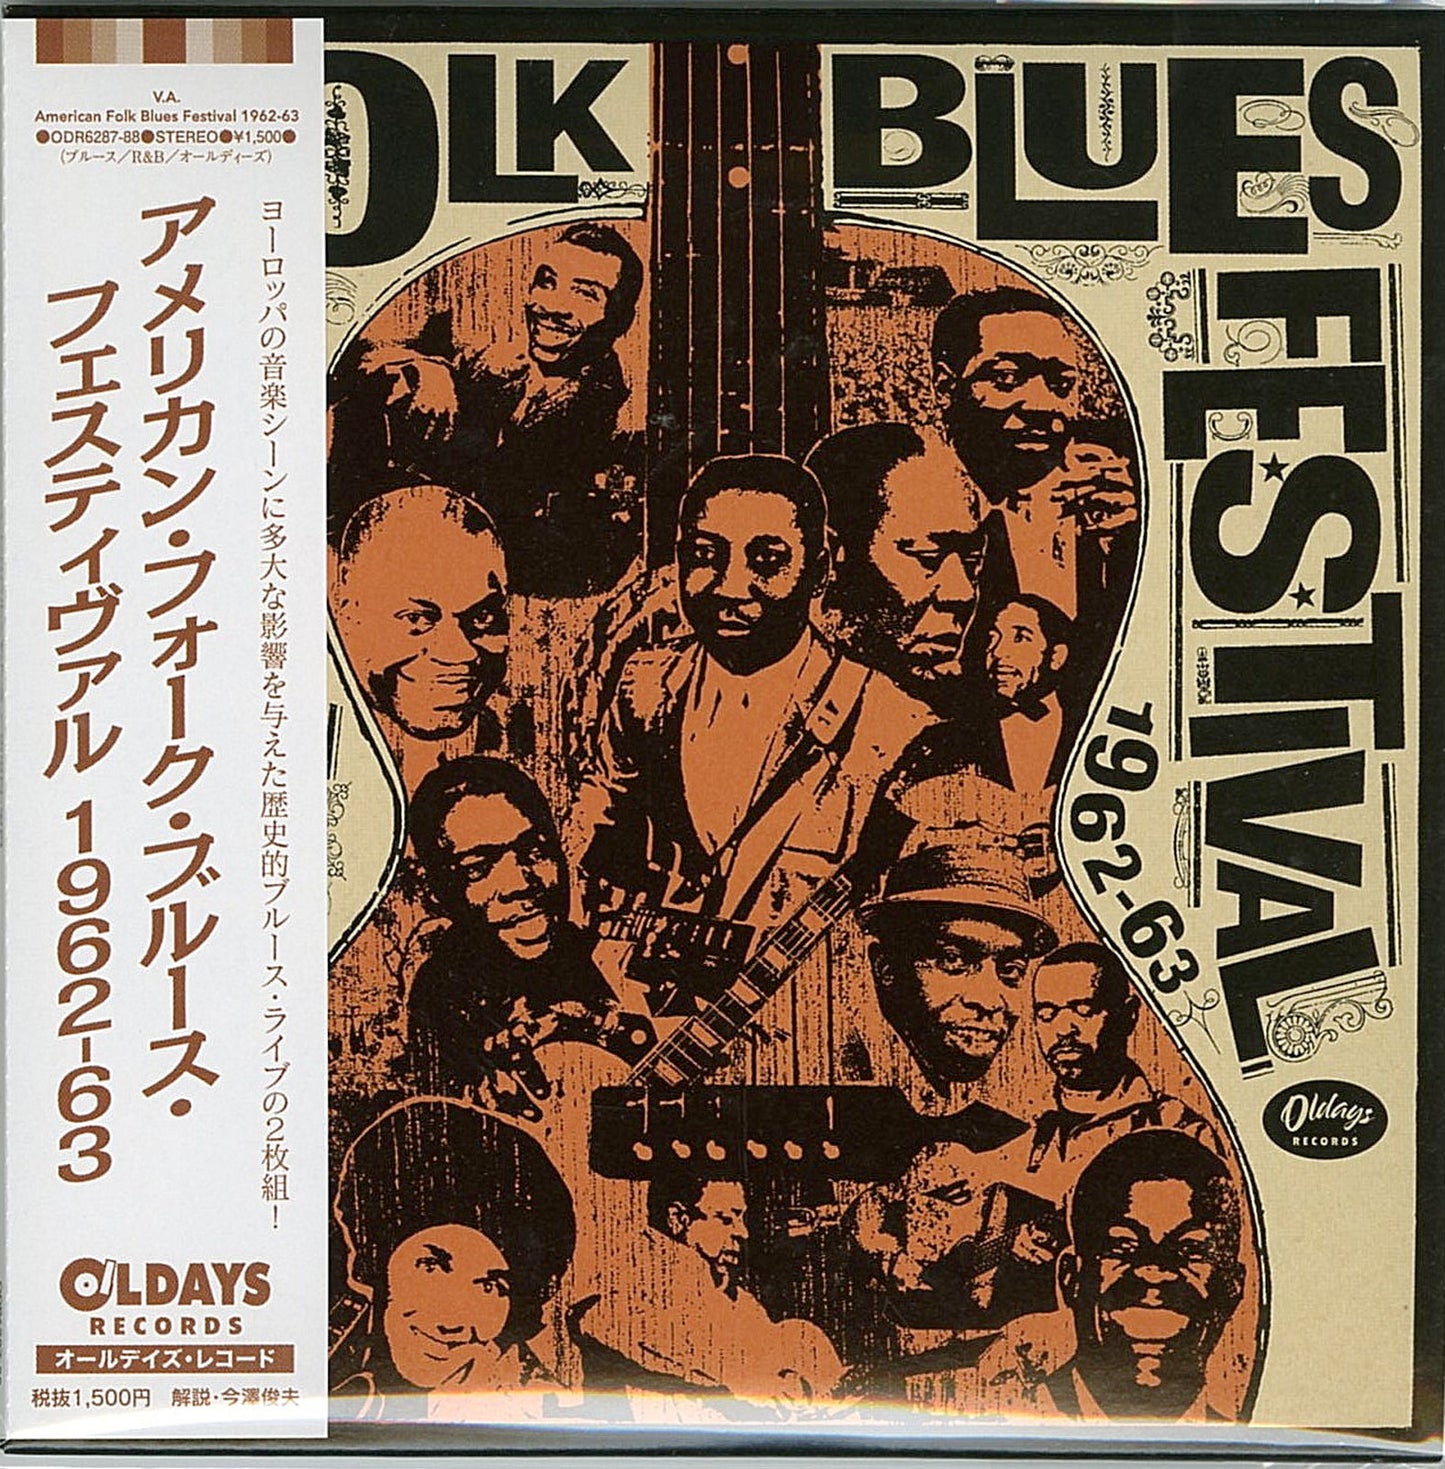 V.A. - American Folk Blues Festival 1962-1963 - Japan  2 Mini LP CD